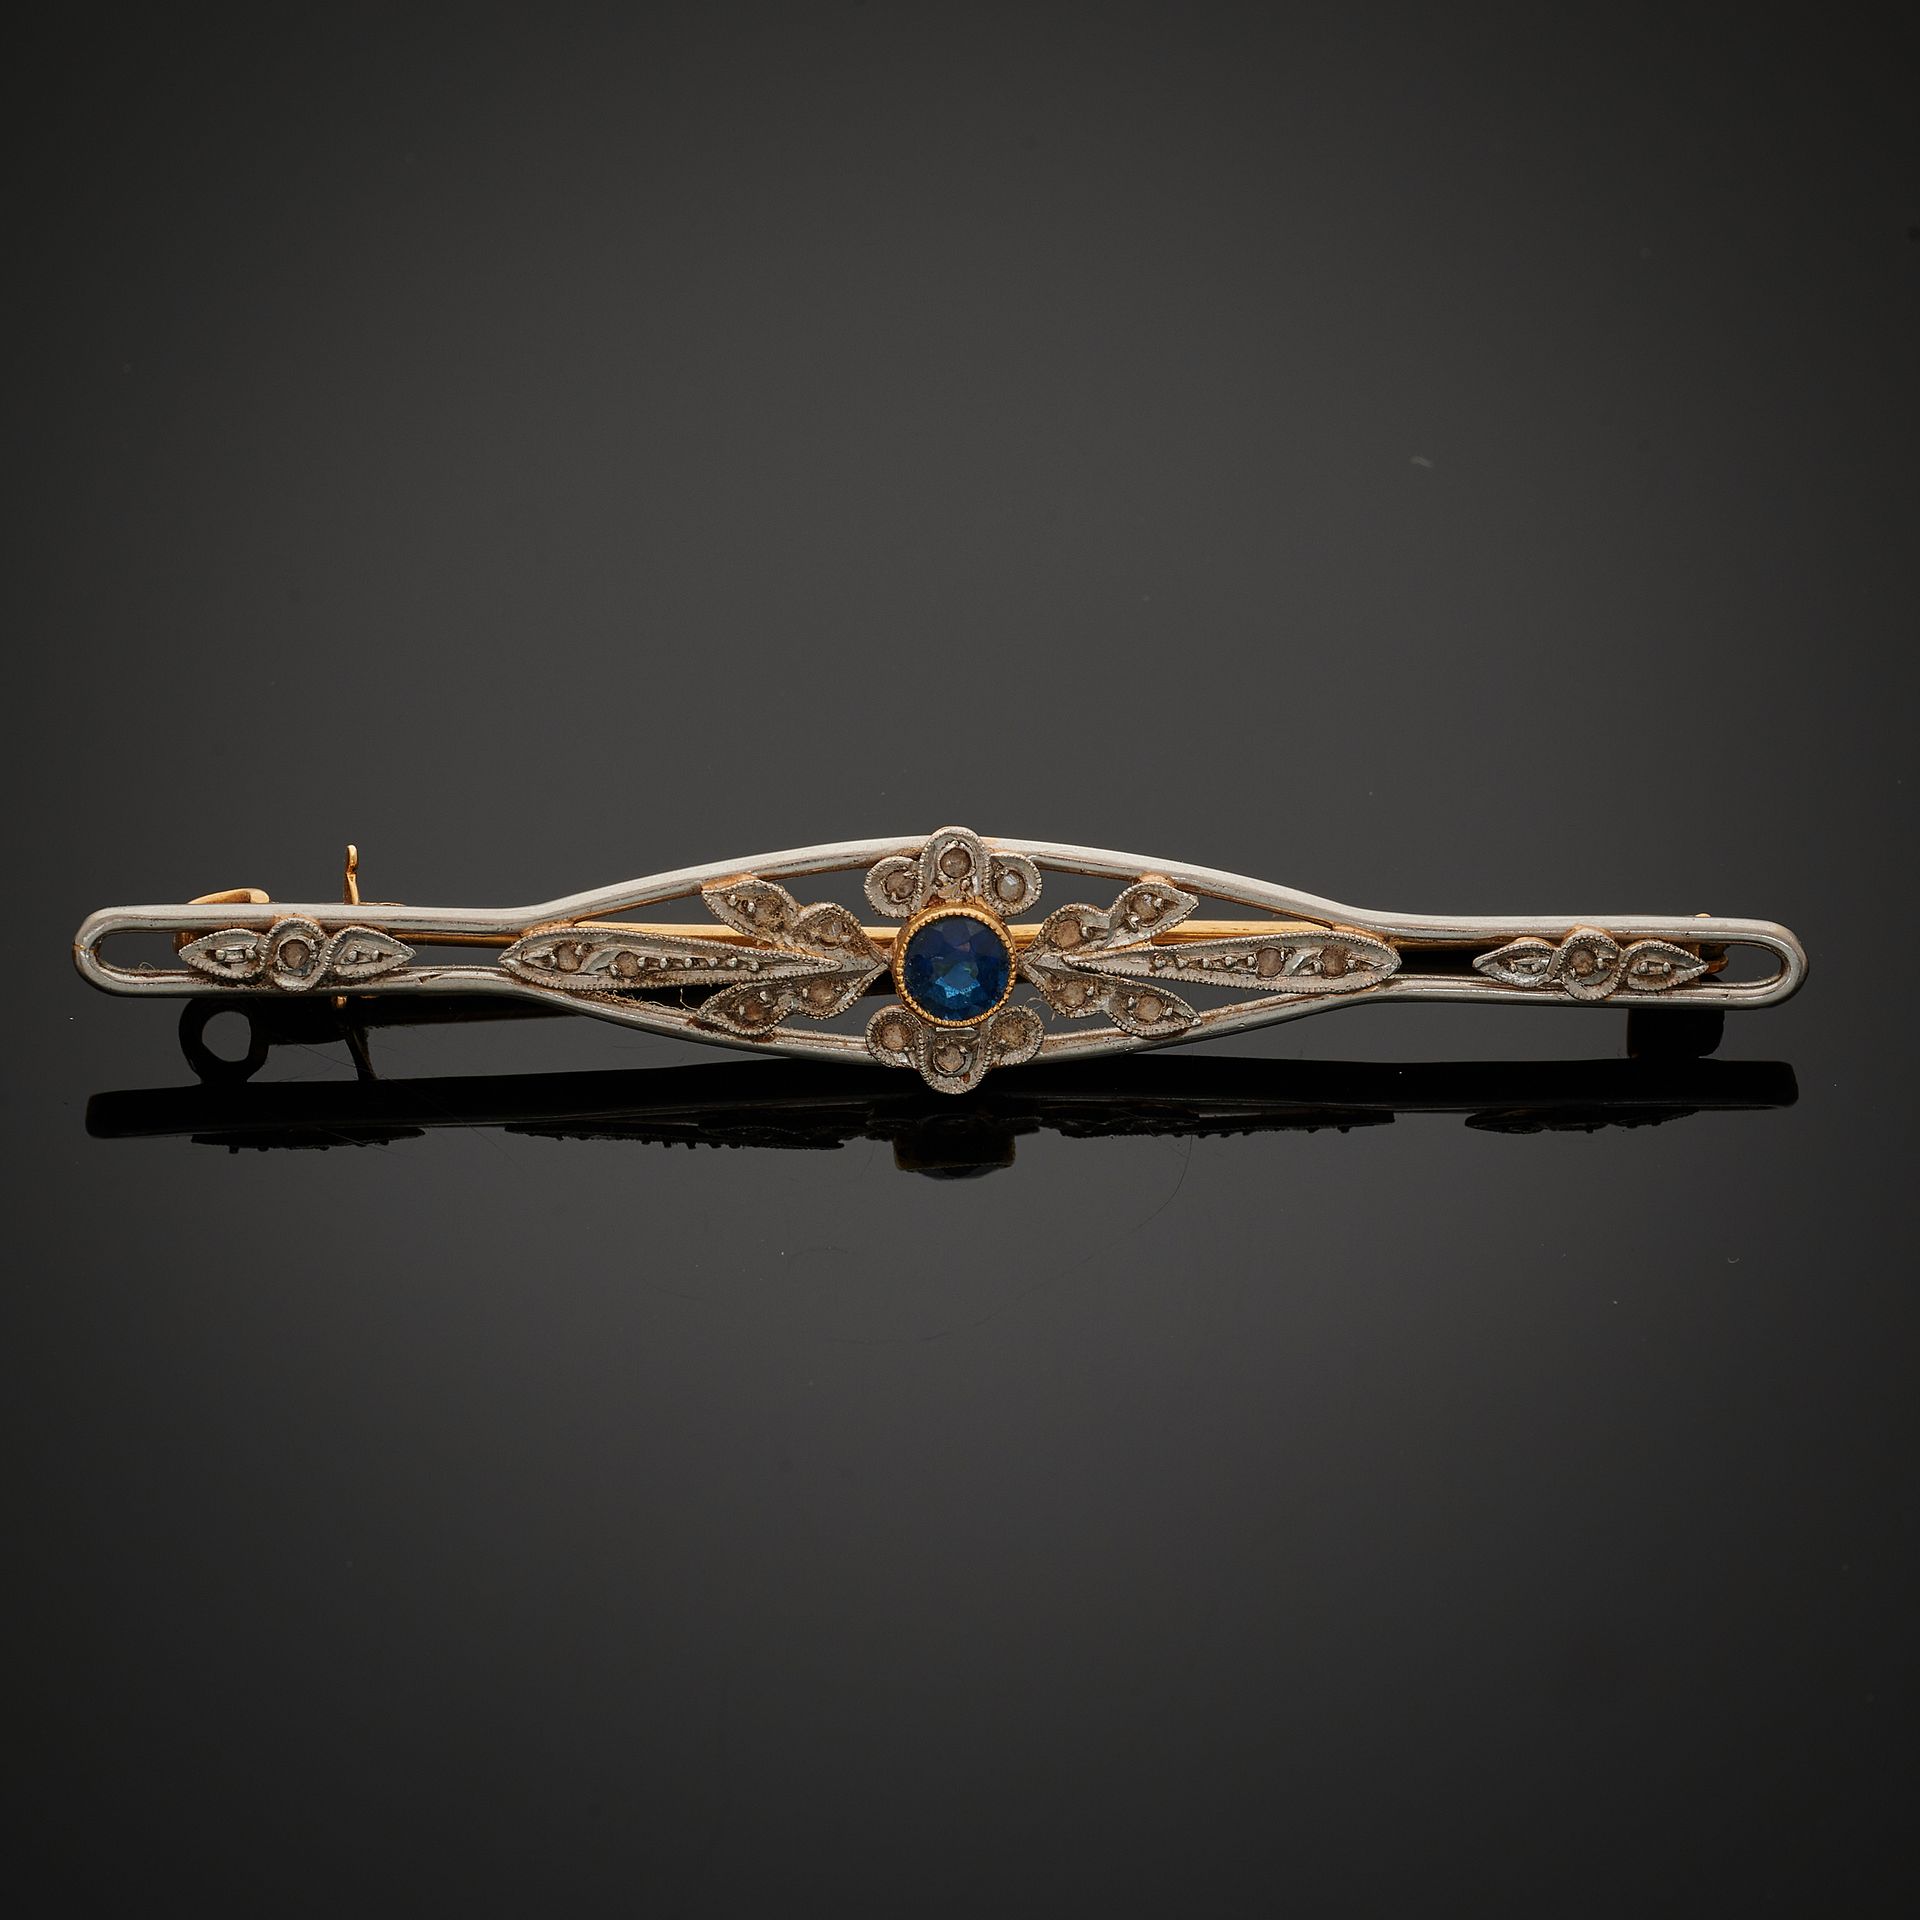 Null 双色金发夹，镶嵌着一颗仿蓝宝石，未切割的小钻石和幻彩。古老风格的法国作品。 
毛重：5.4克